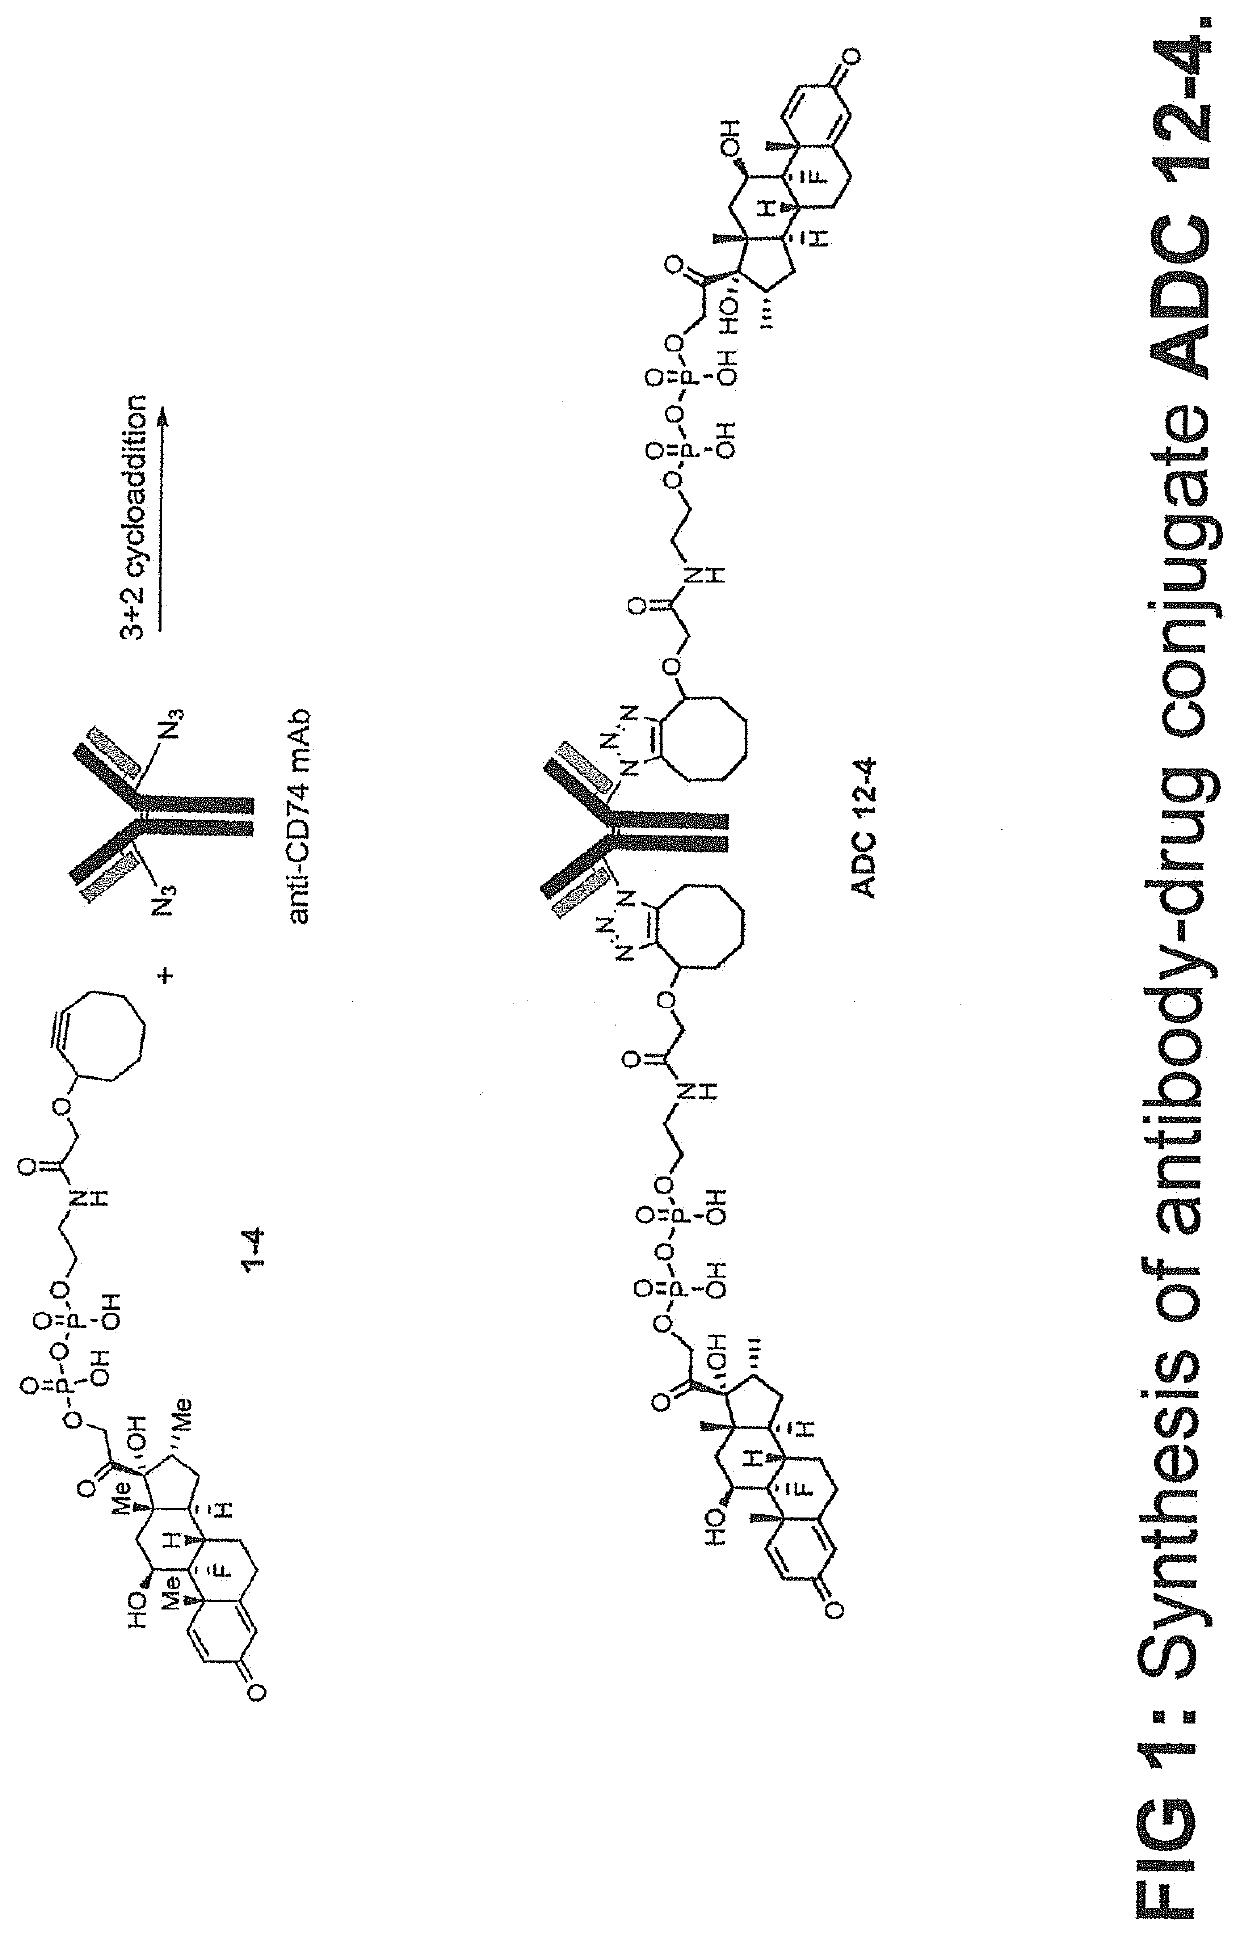 Antibody drug conjugate for Anti-inflammatory applications